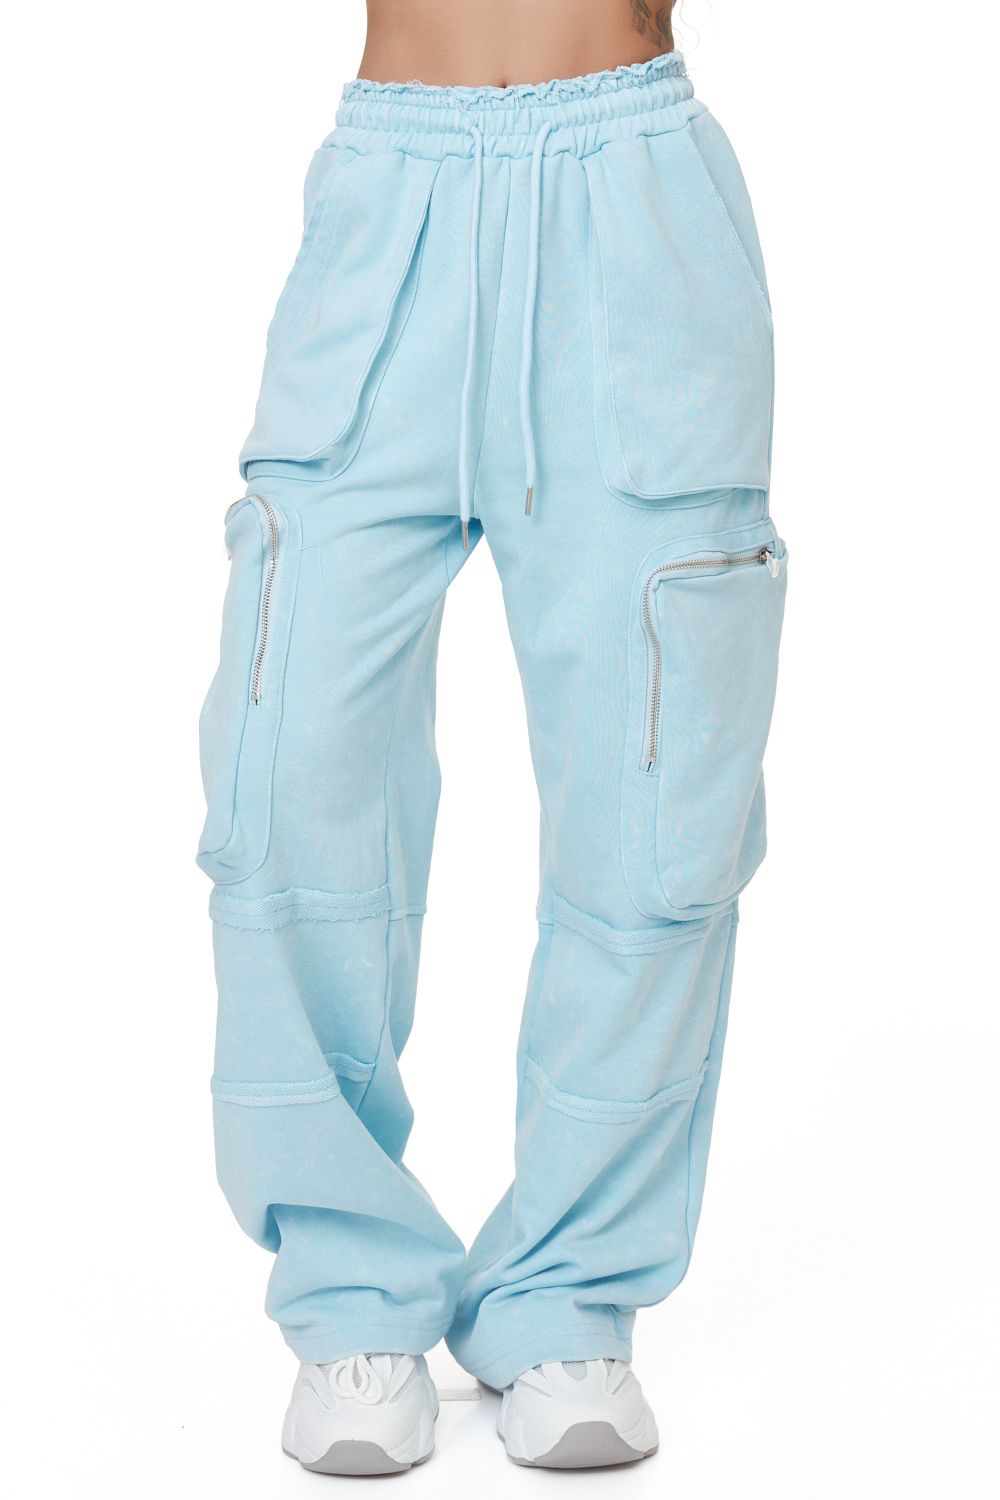 Ladies casual trousers blue Menila Bogas